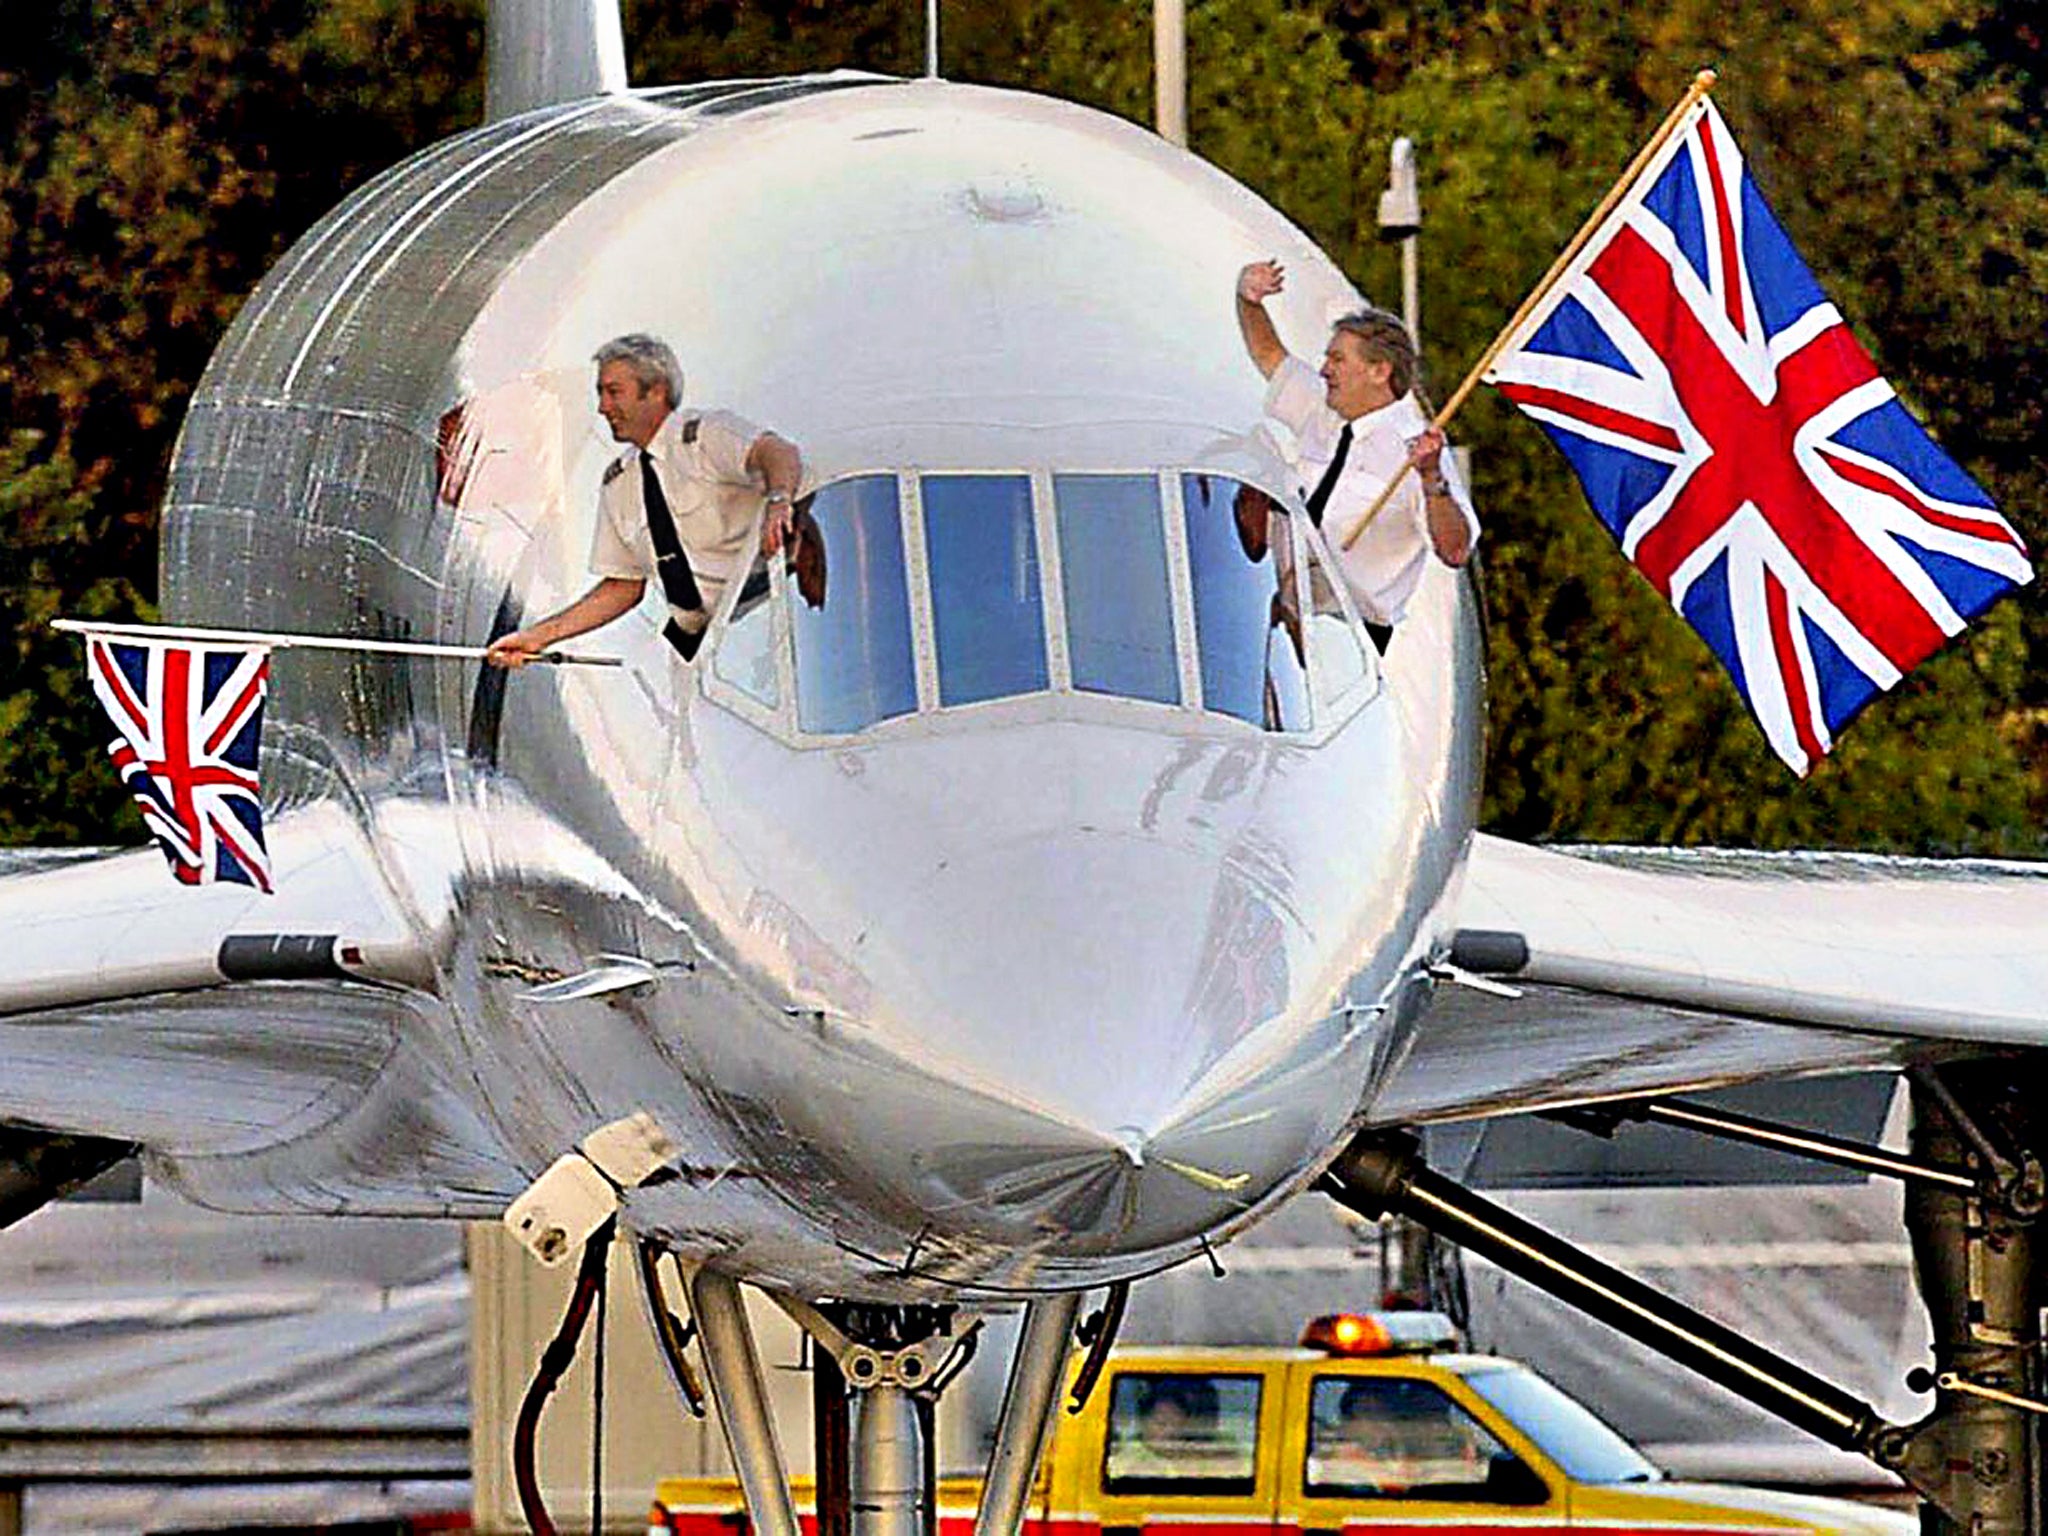 Hangar-bound: Crew mark Concorde's final supersonic trip